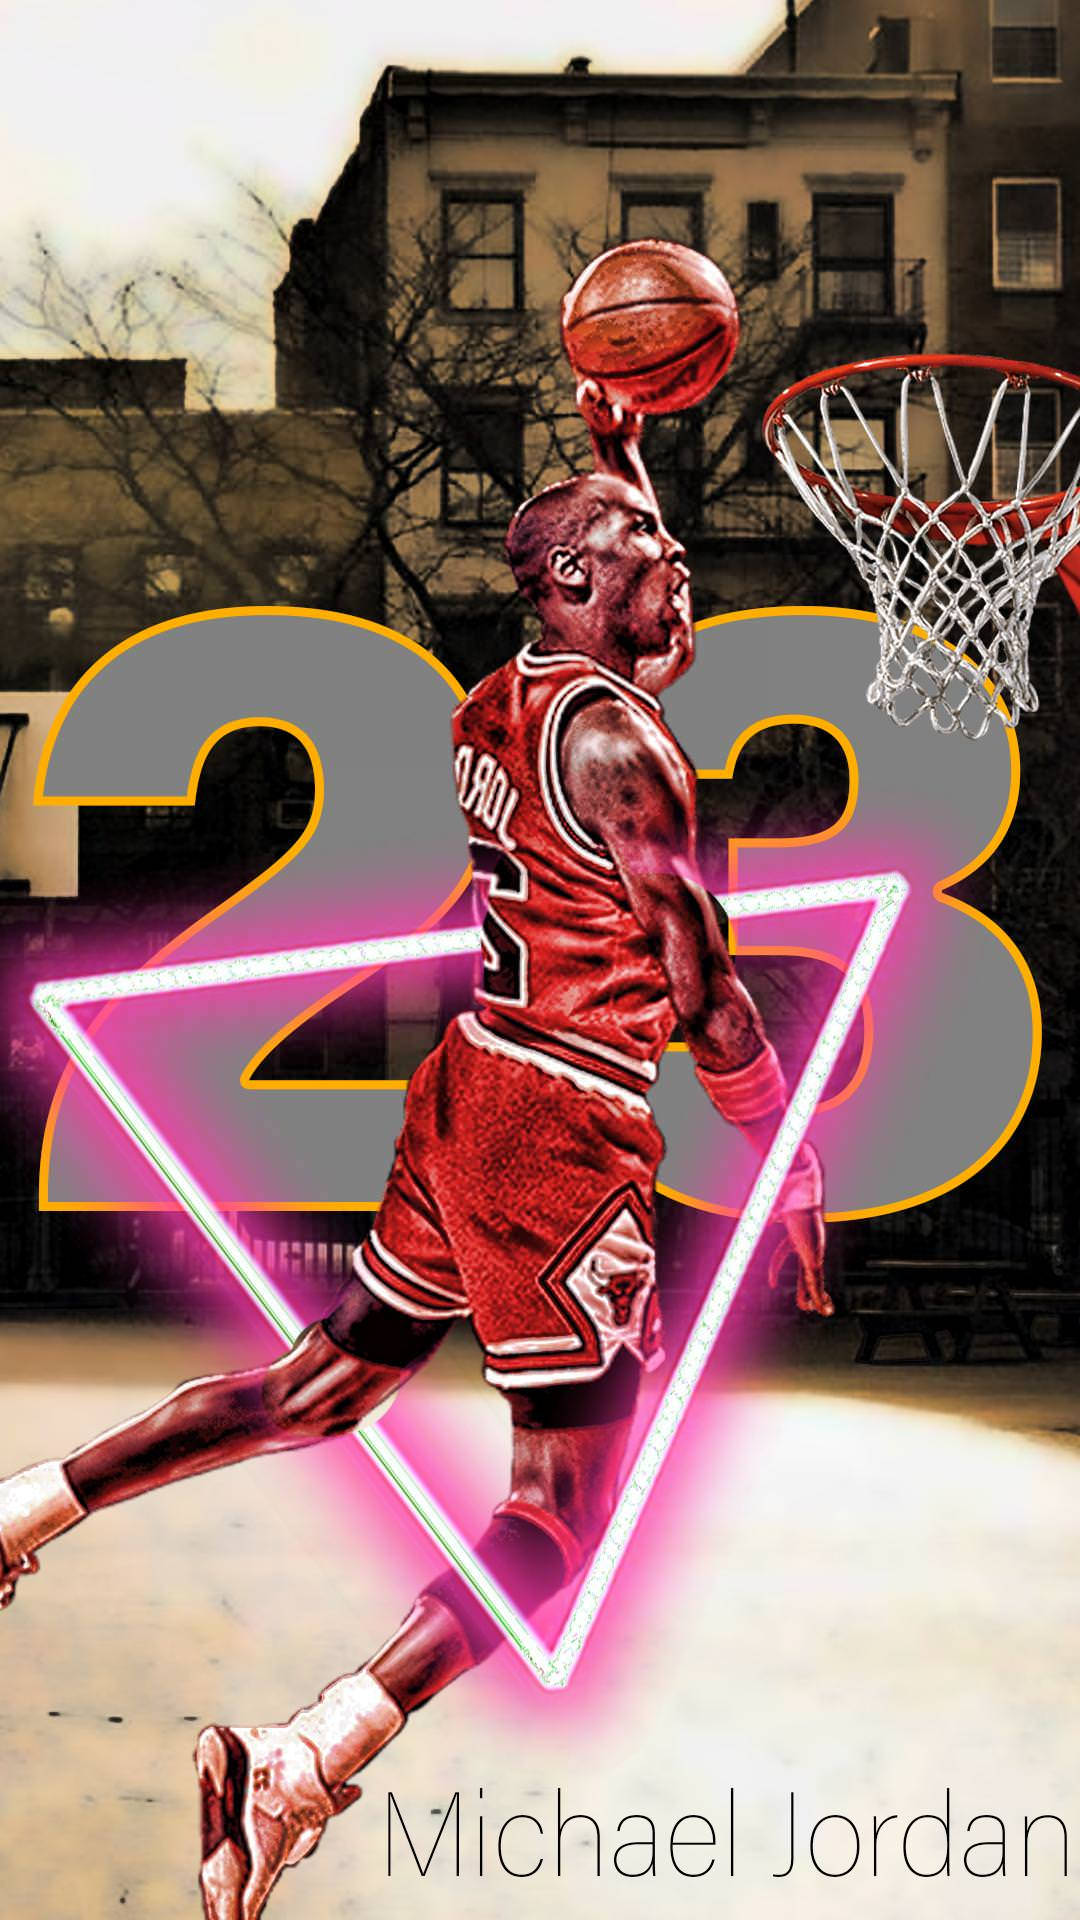 Michael Jordan 23 Cool Basketball Iphone Background